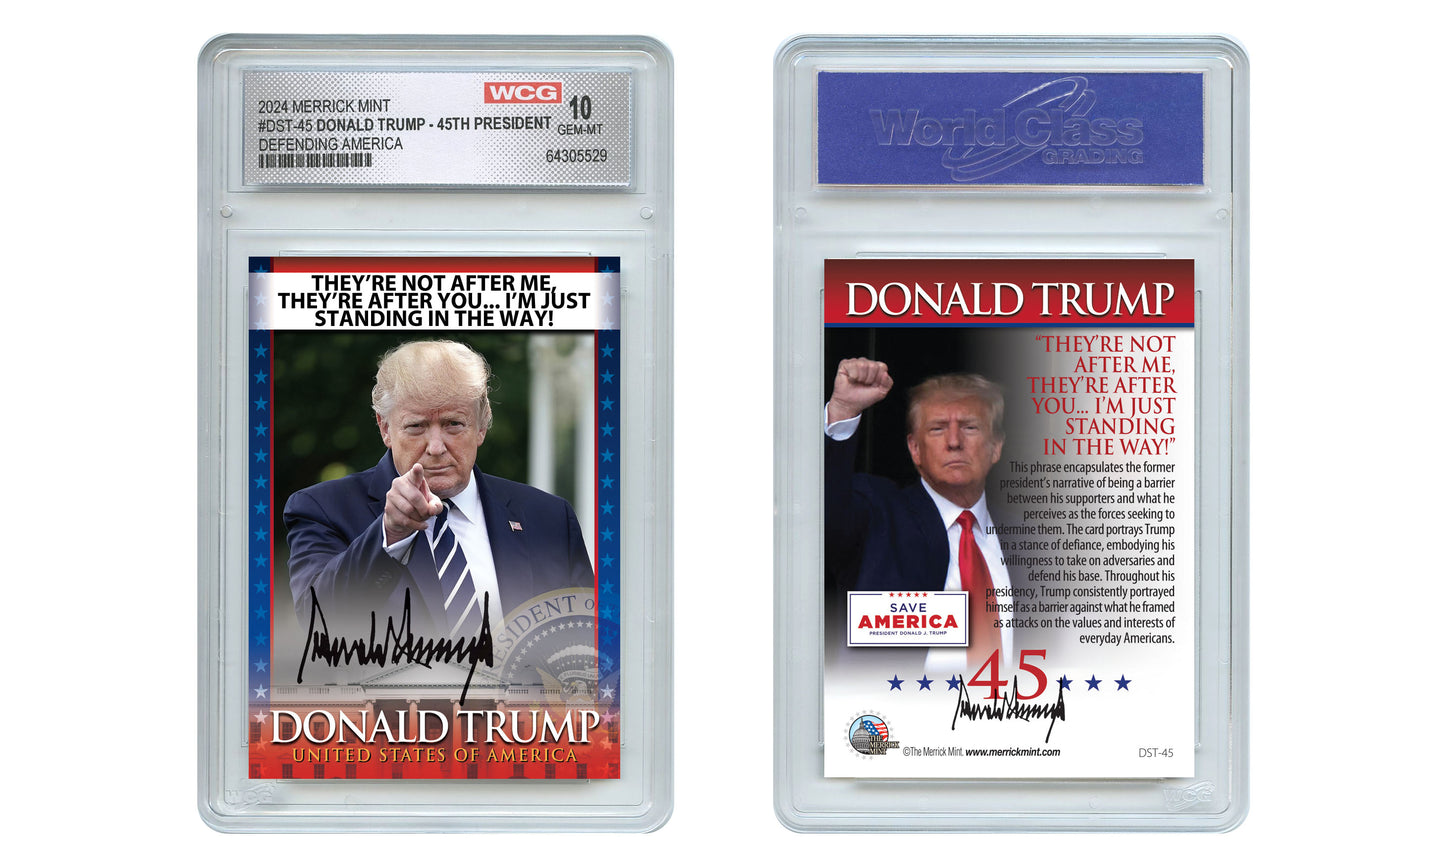 Donald Trump Defending America Trading Card (Graded GEM-MT 10)